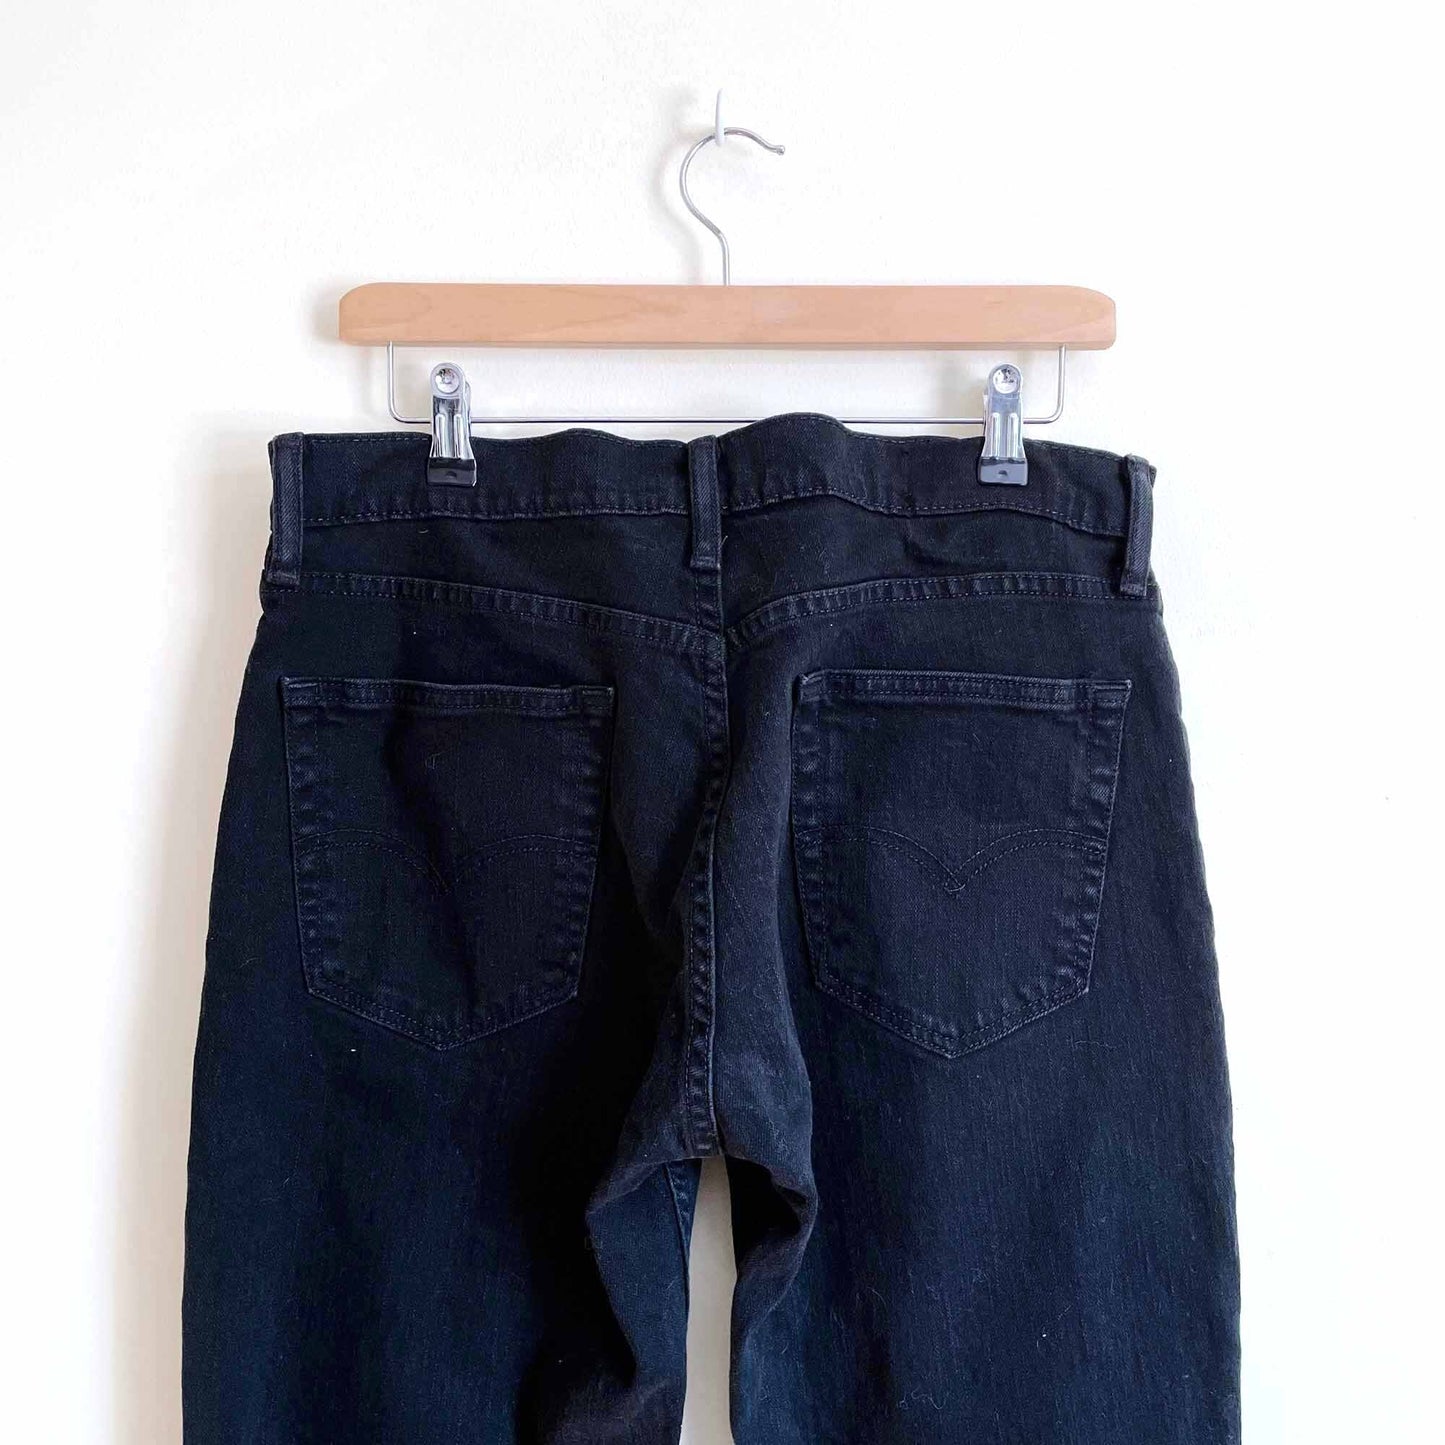 Levi's black high rise skinny jeans - size 33